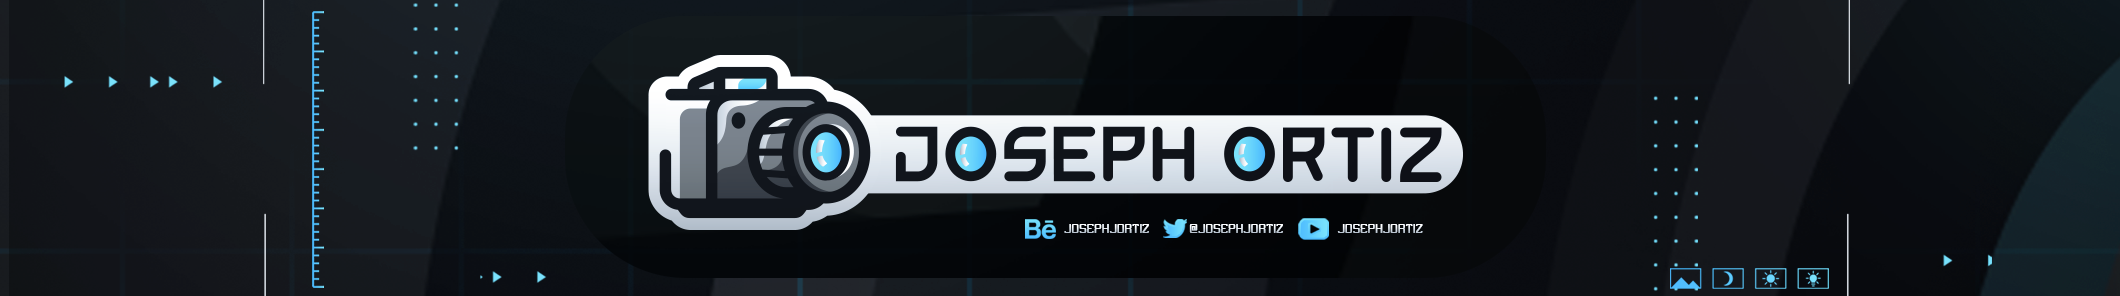 Joseph Ortizs profilbanner